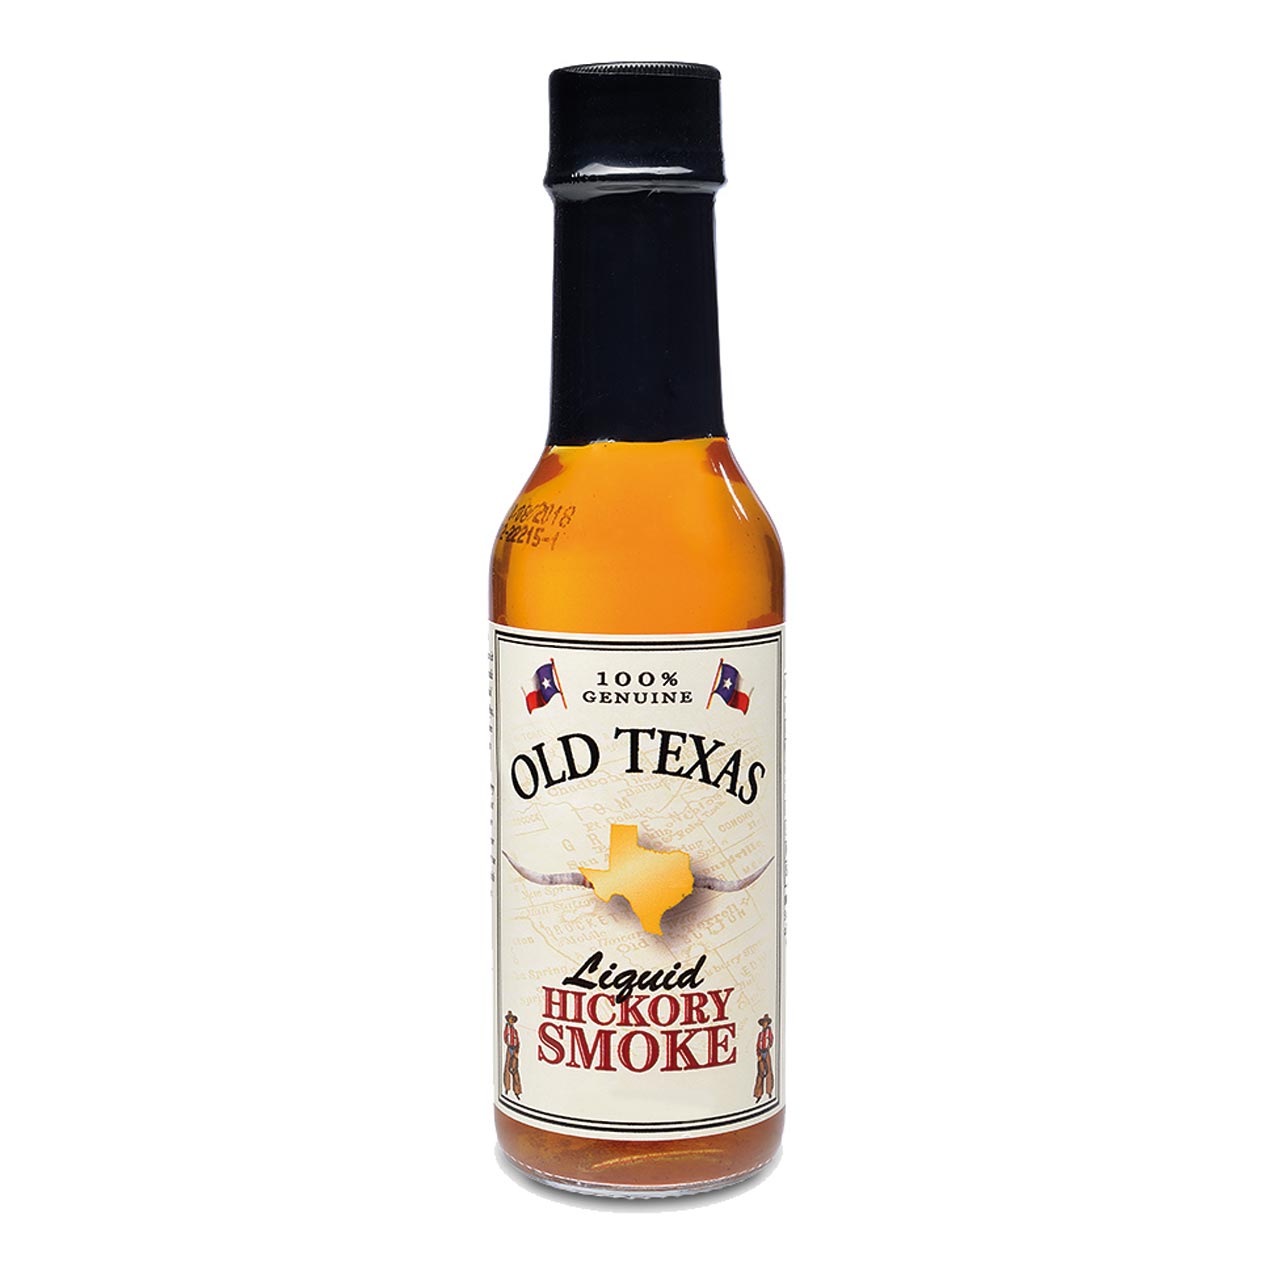 Old Texas - Liquid Hickory Smoke